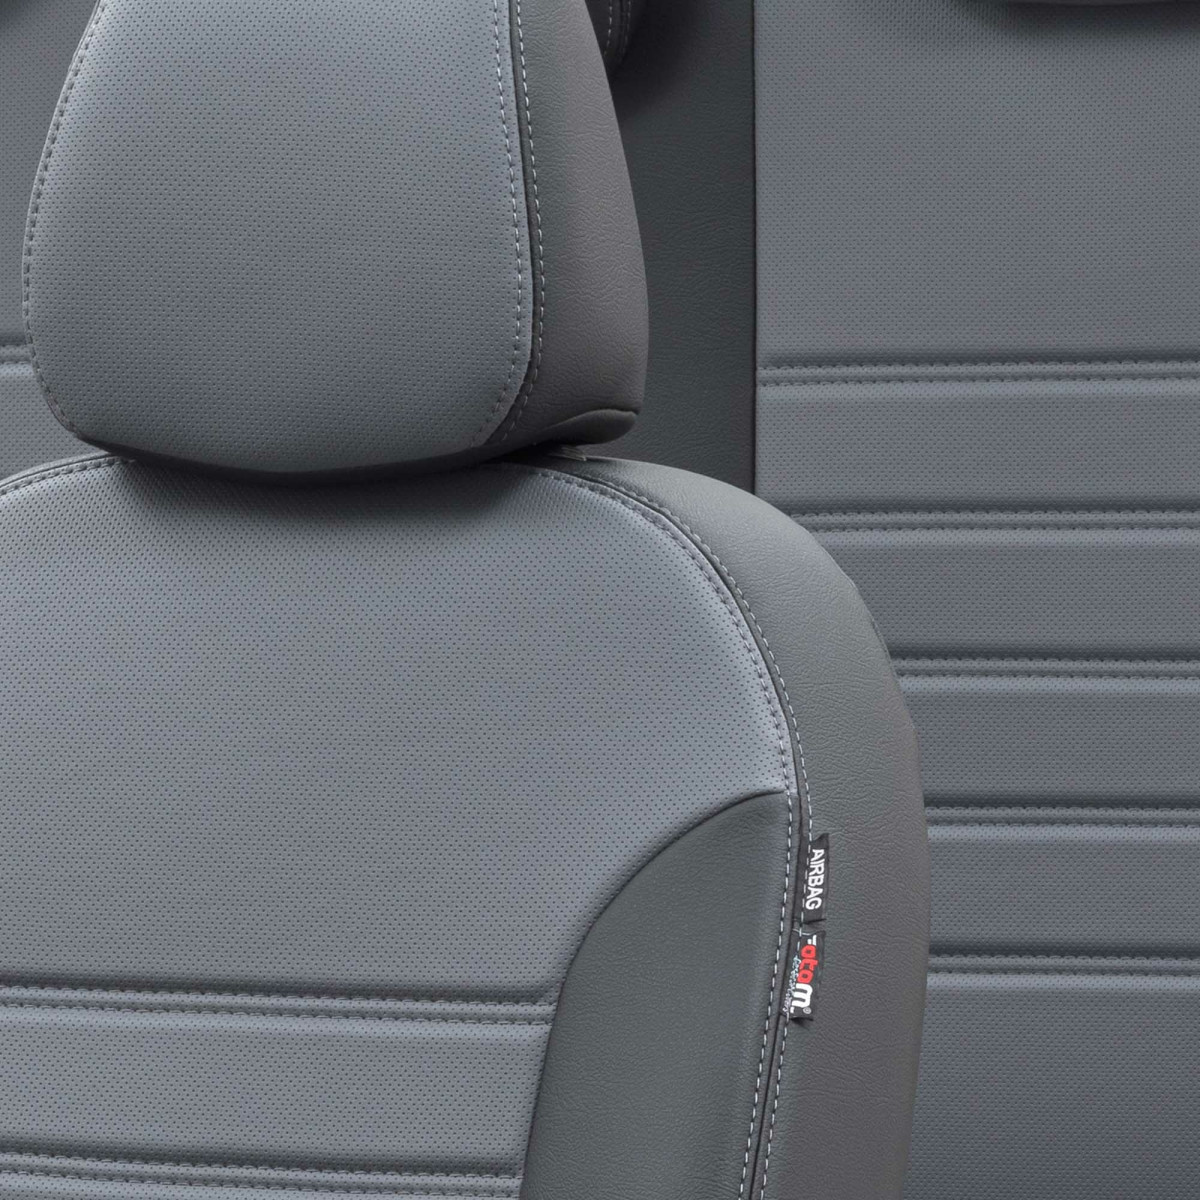 Istanbul seat covers (eco leather) Volkswagen Passat B7